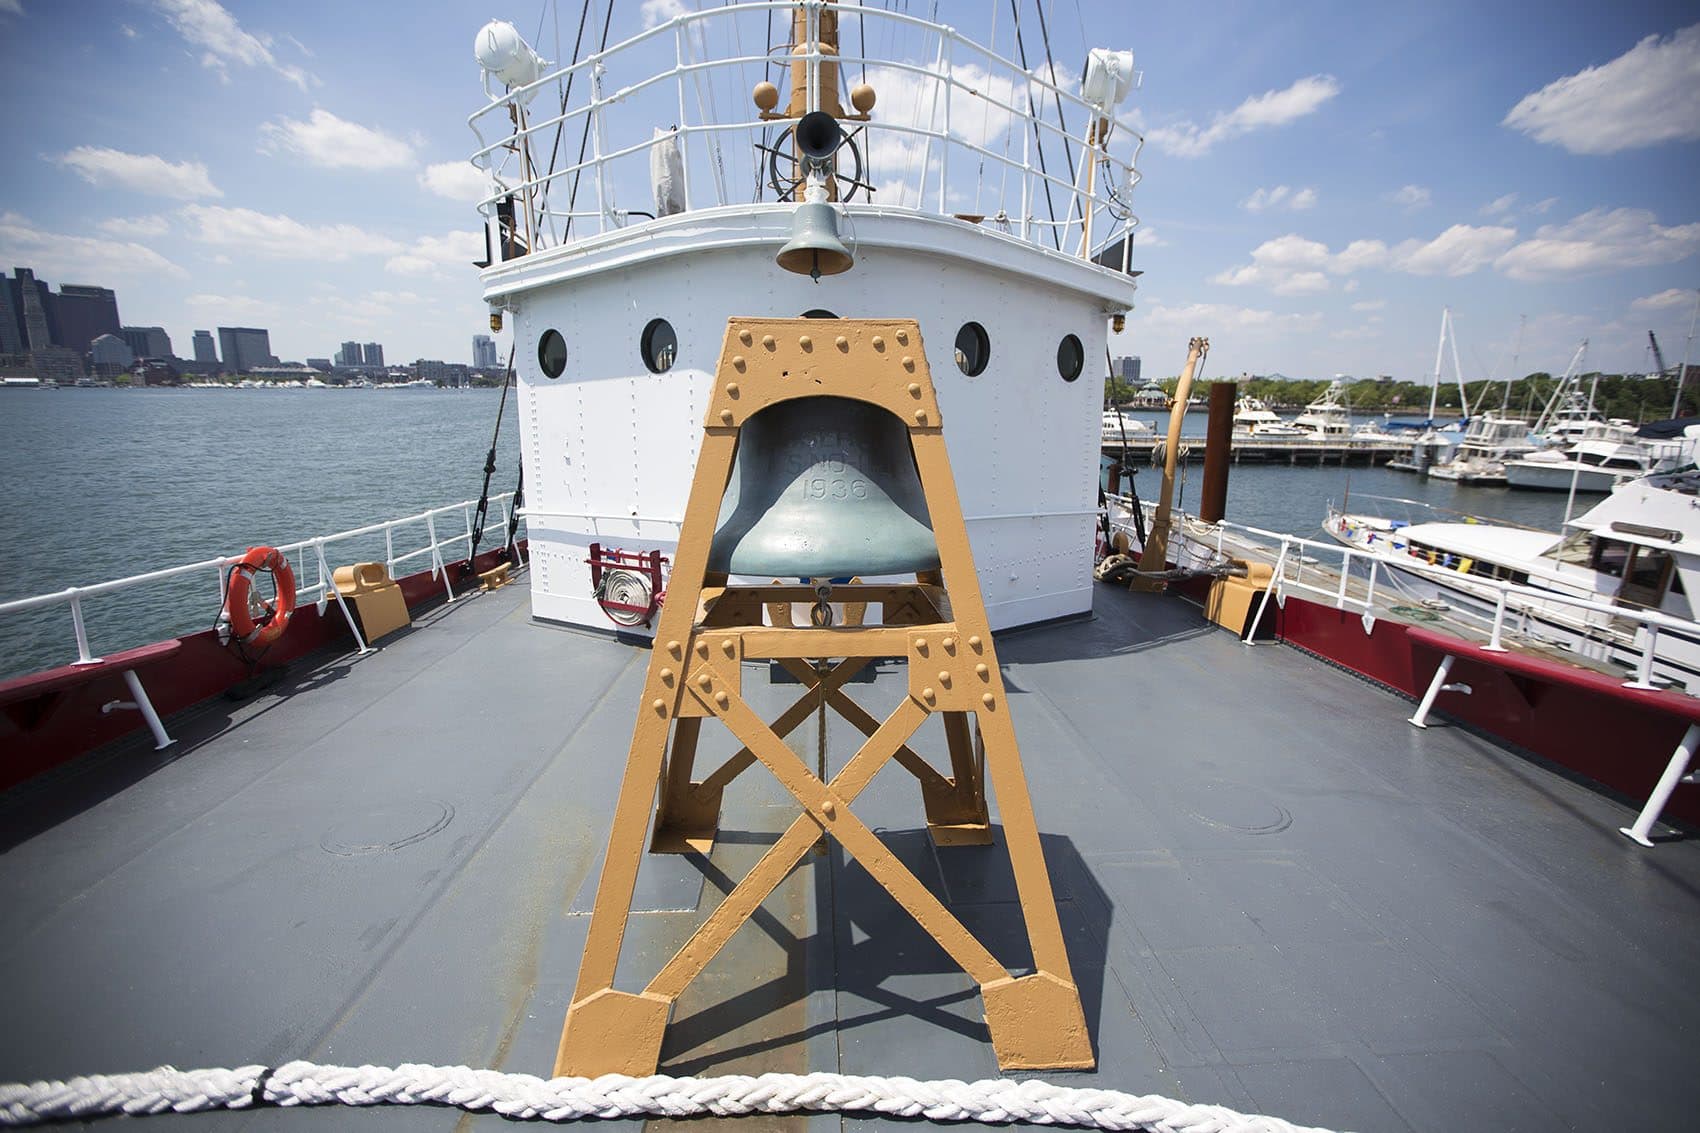 Nantucket lightship returns to Mass. waters